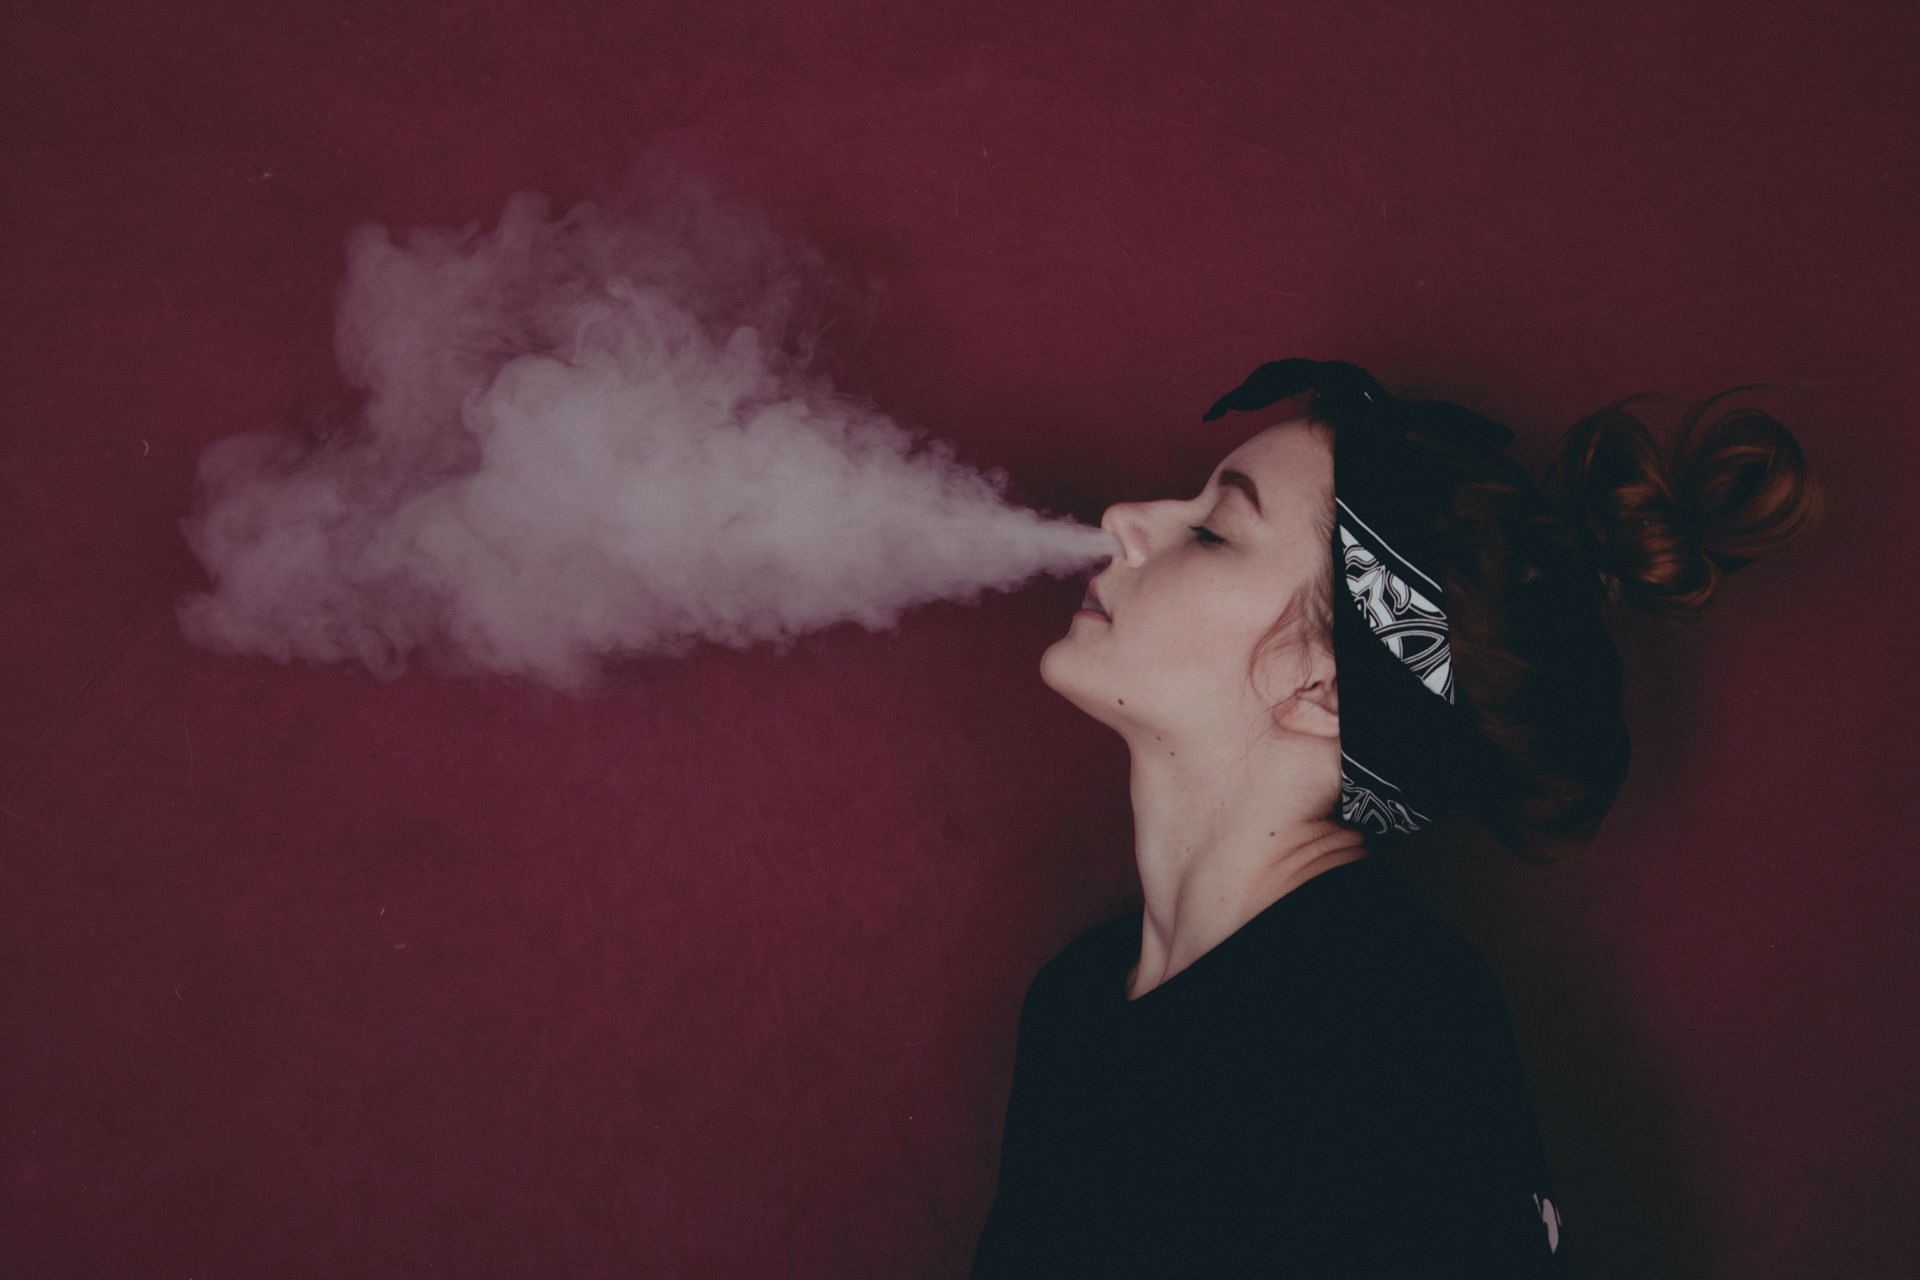 Exhaling vapor (Image via Pexels/Almighty Shilref)